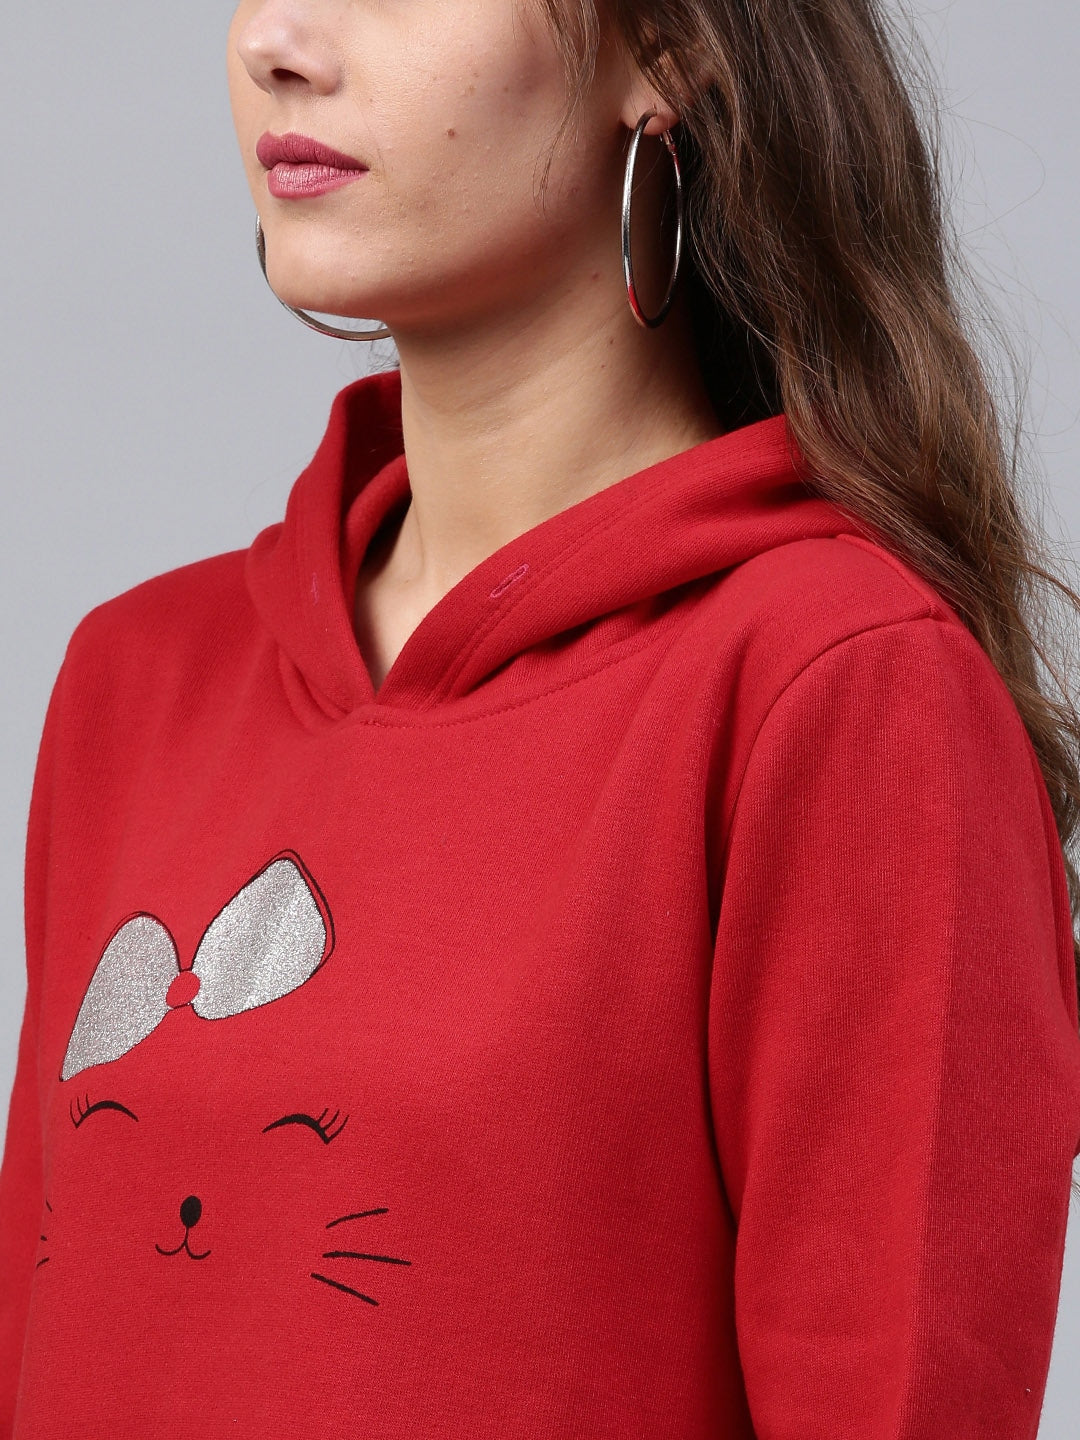 Bow Kitty Red Sweatshirt